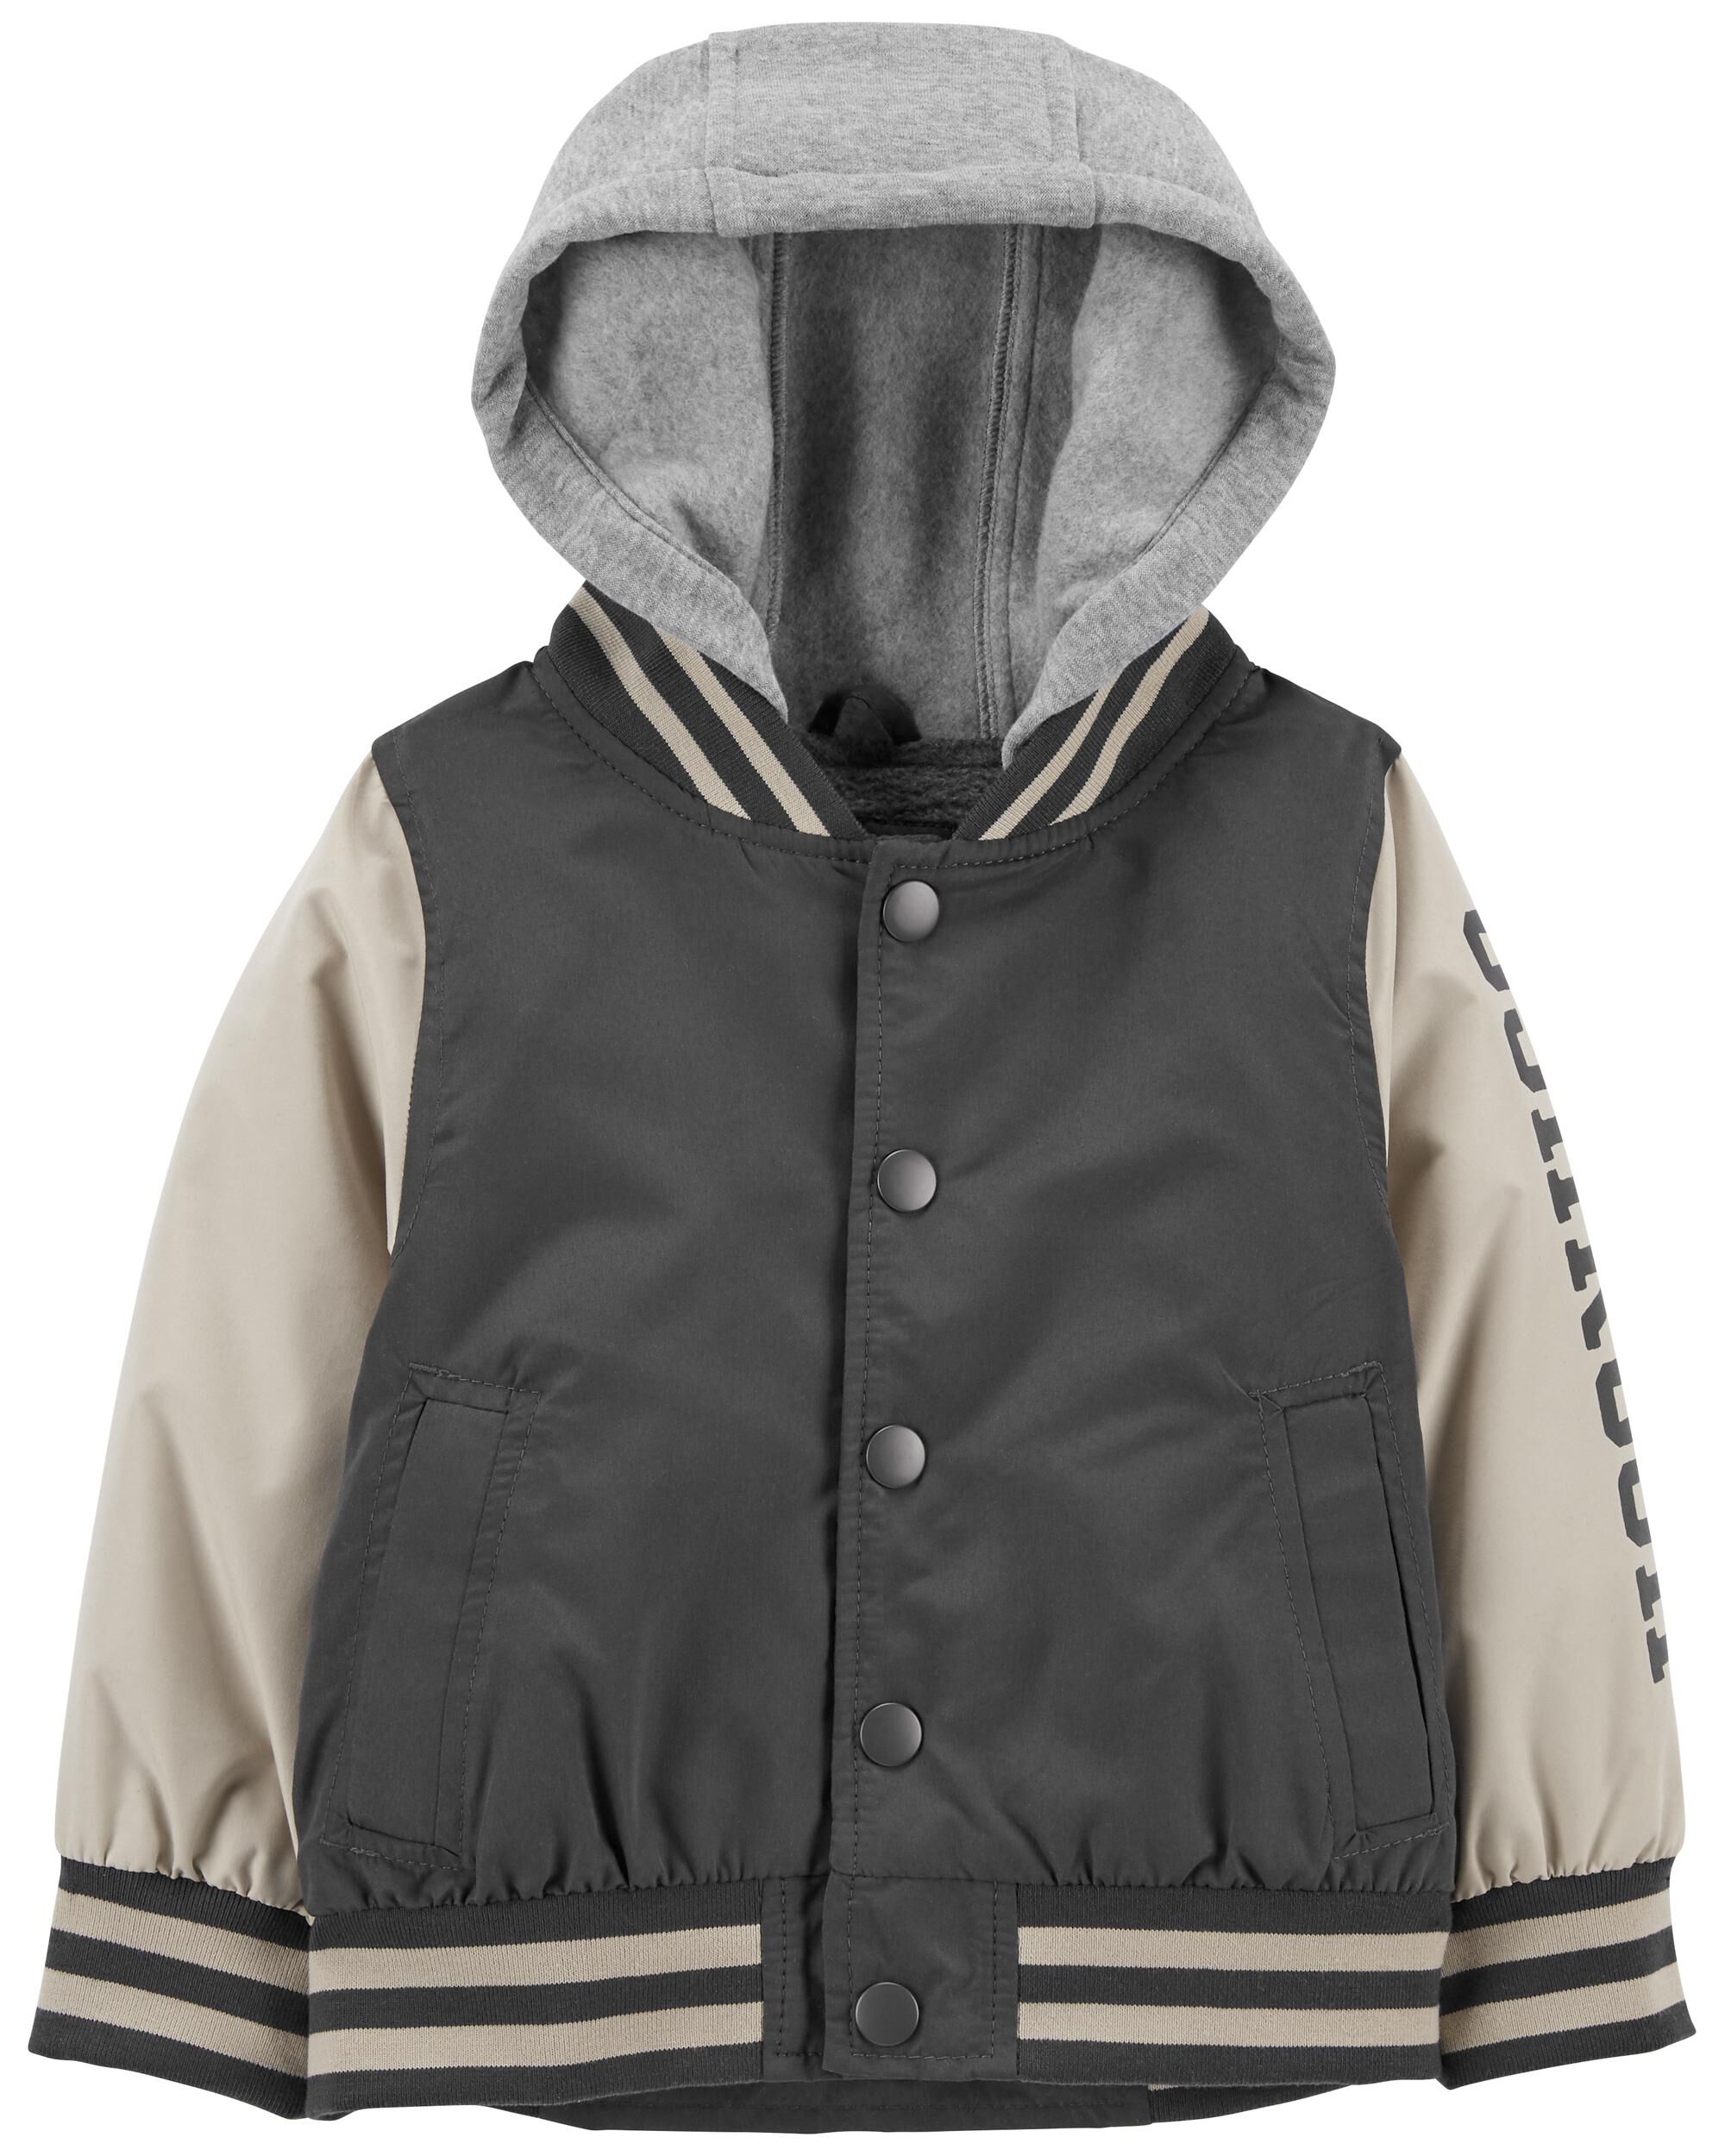 Osh Kosh B'gosh Infant Boys Grey Fleece Lined Jacket Size 12M 18M 24M 